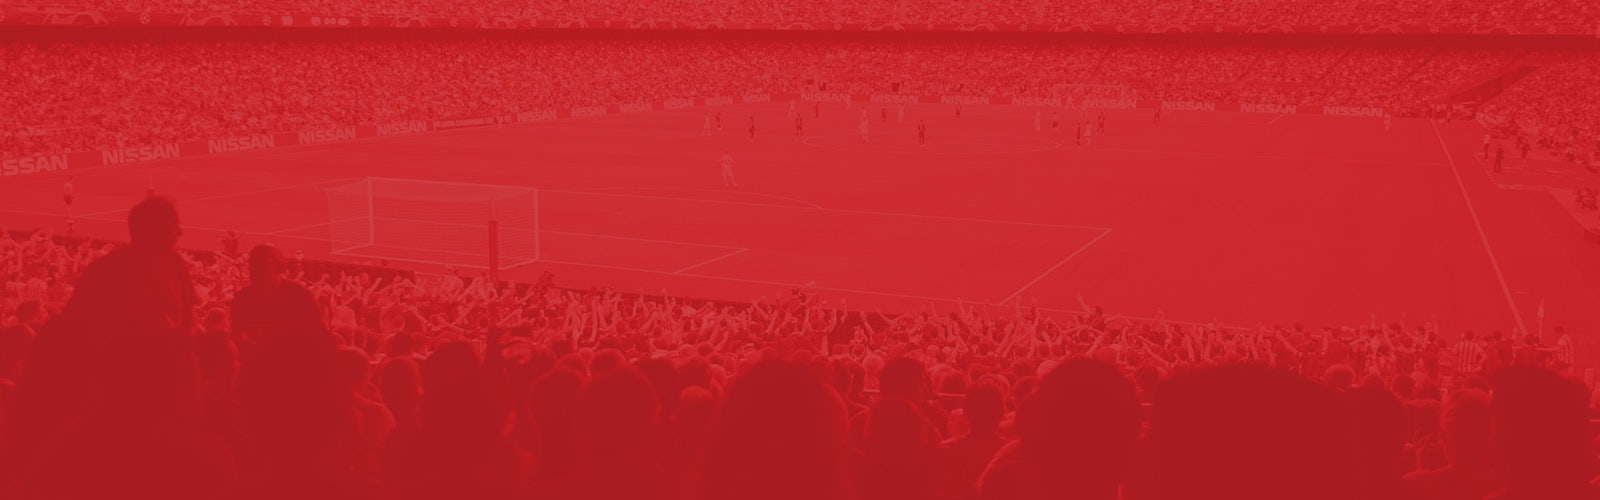 Header image red football fans